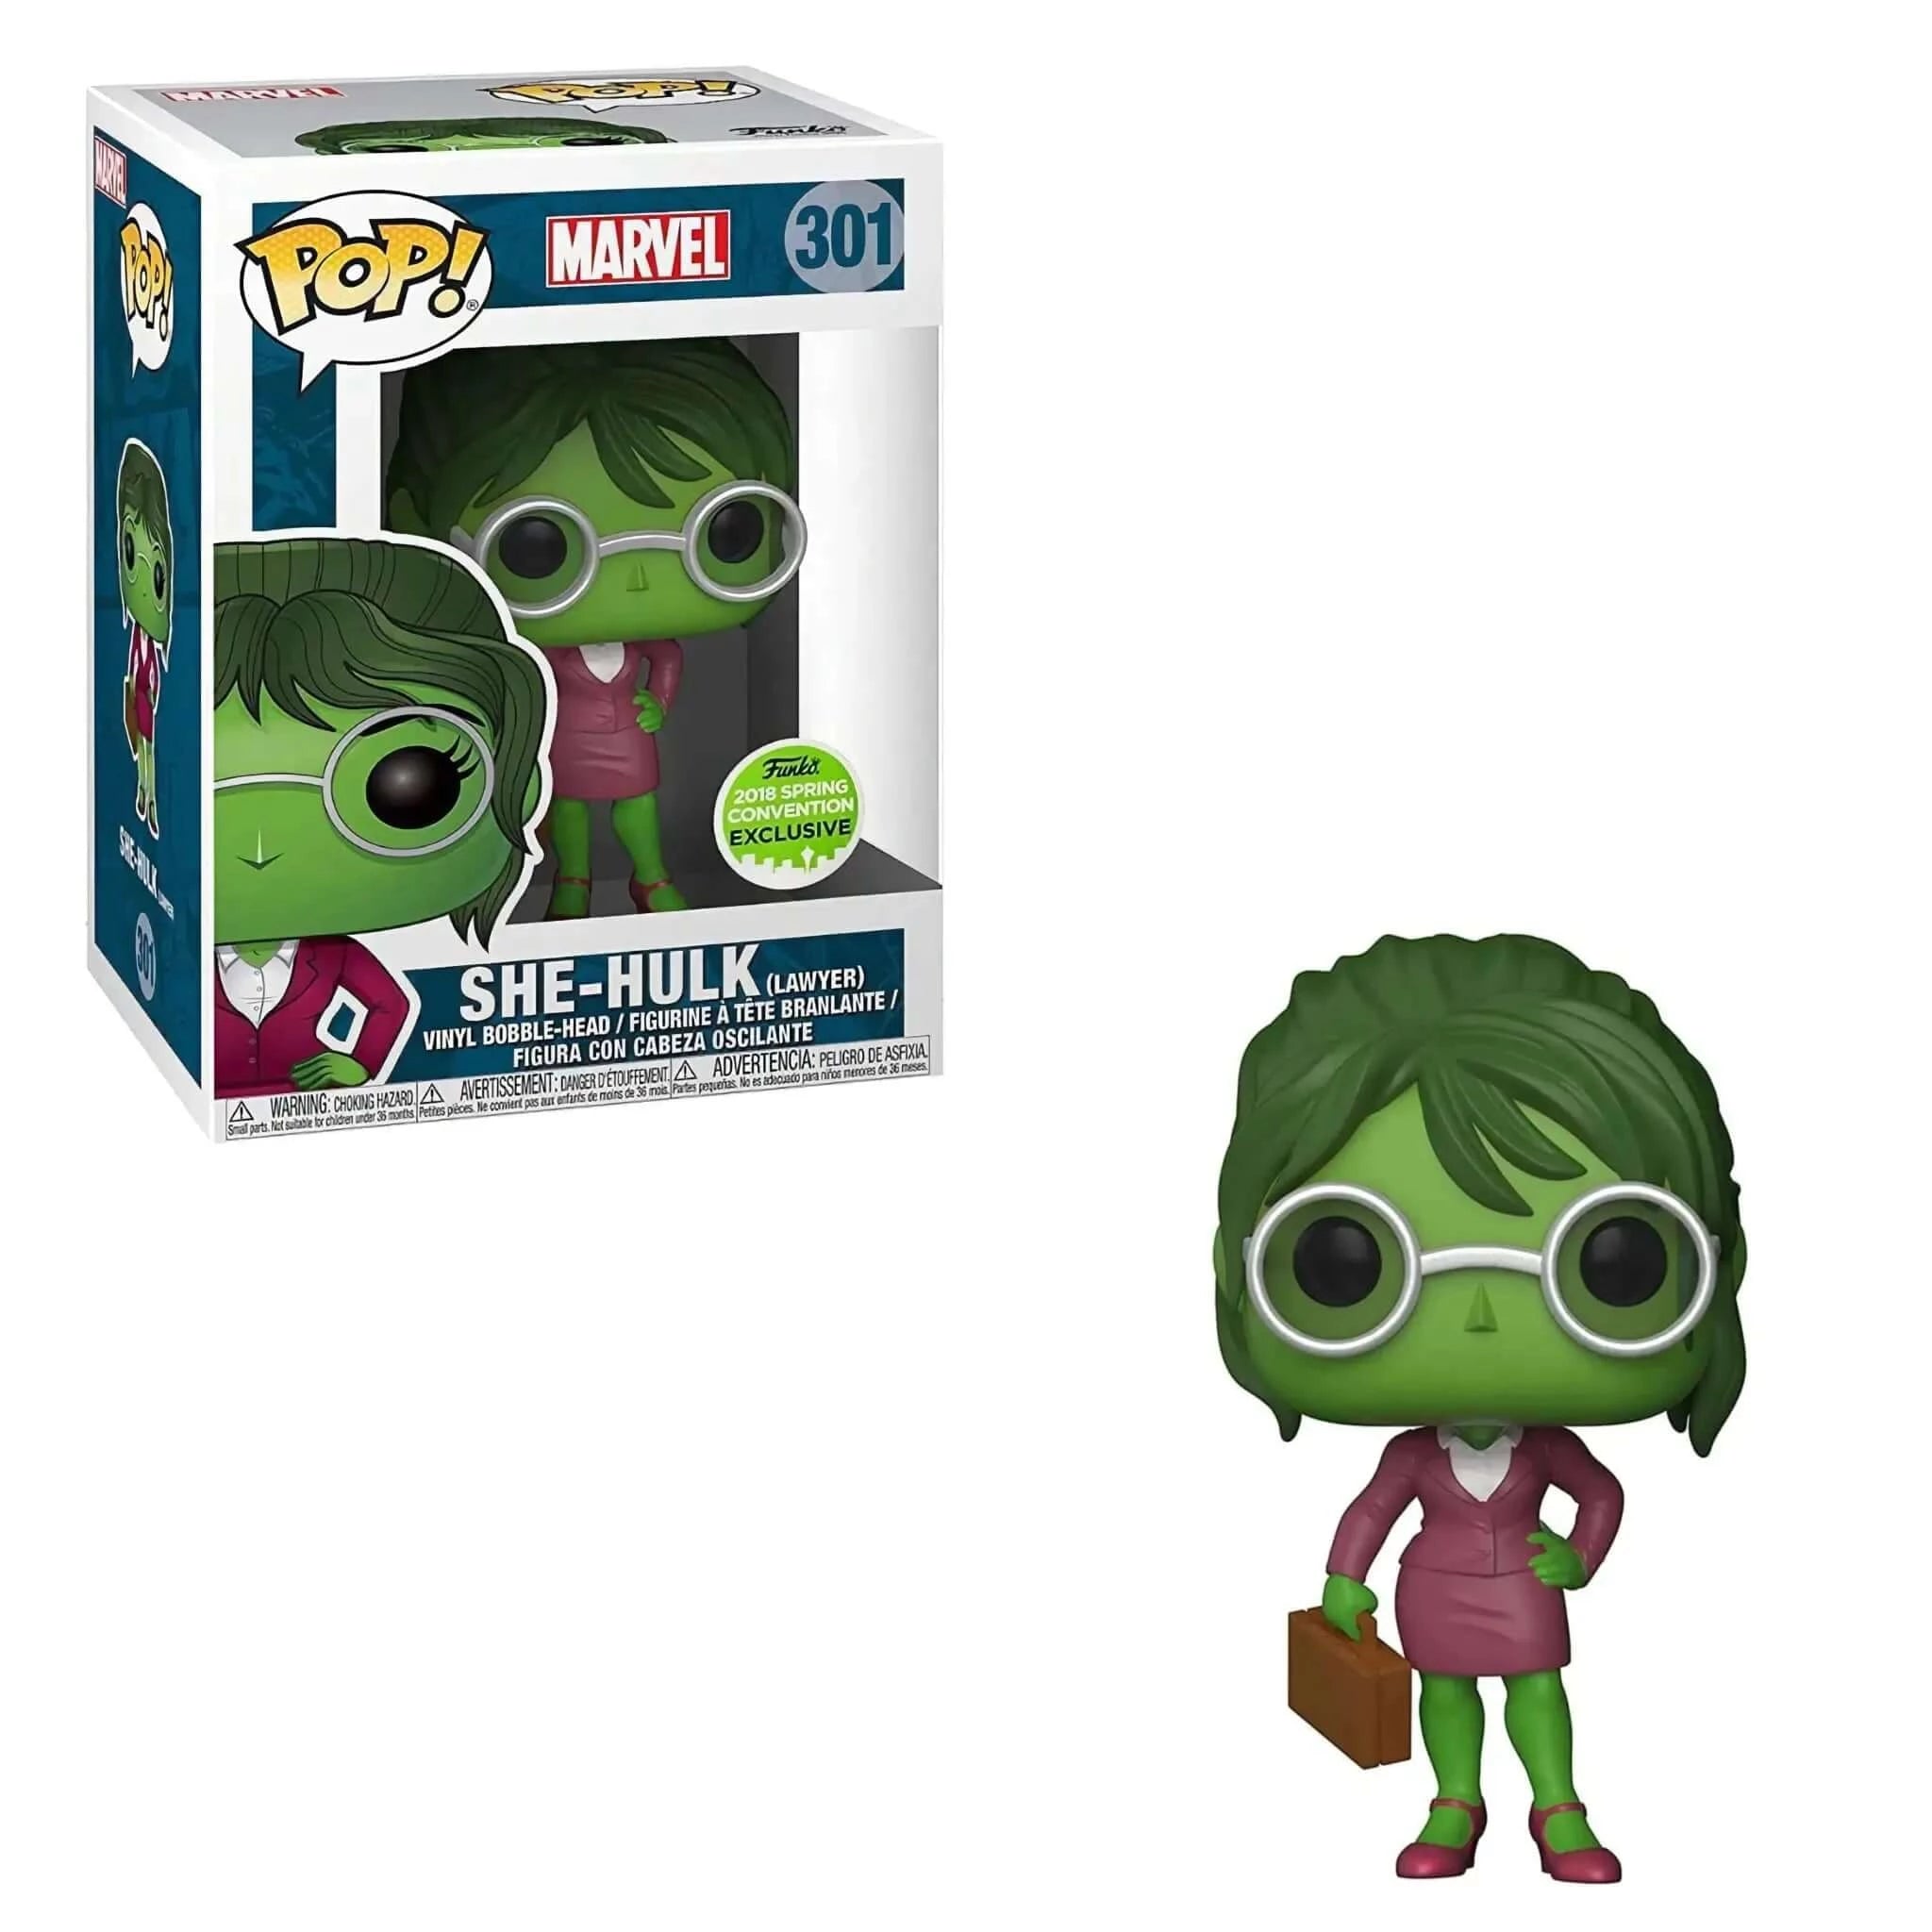 She-Hulk (Lawyer) Funko Pop! 2018 SPRING CON-Jingle Truck Toys